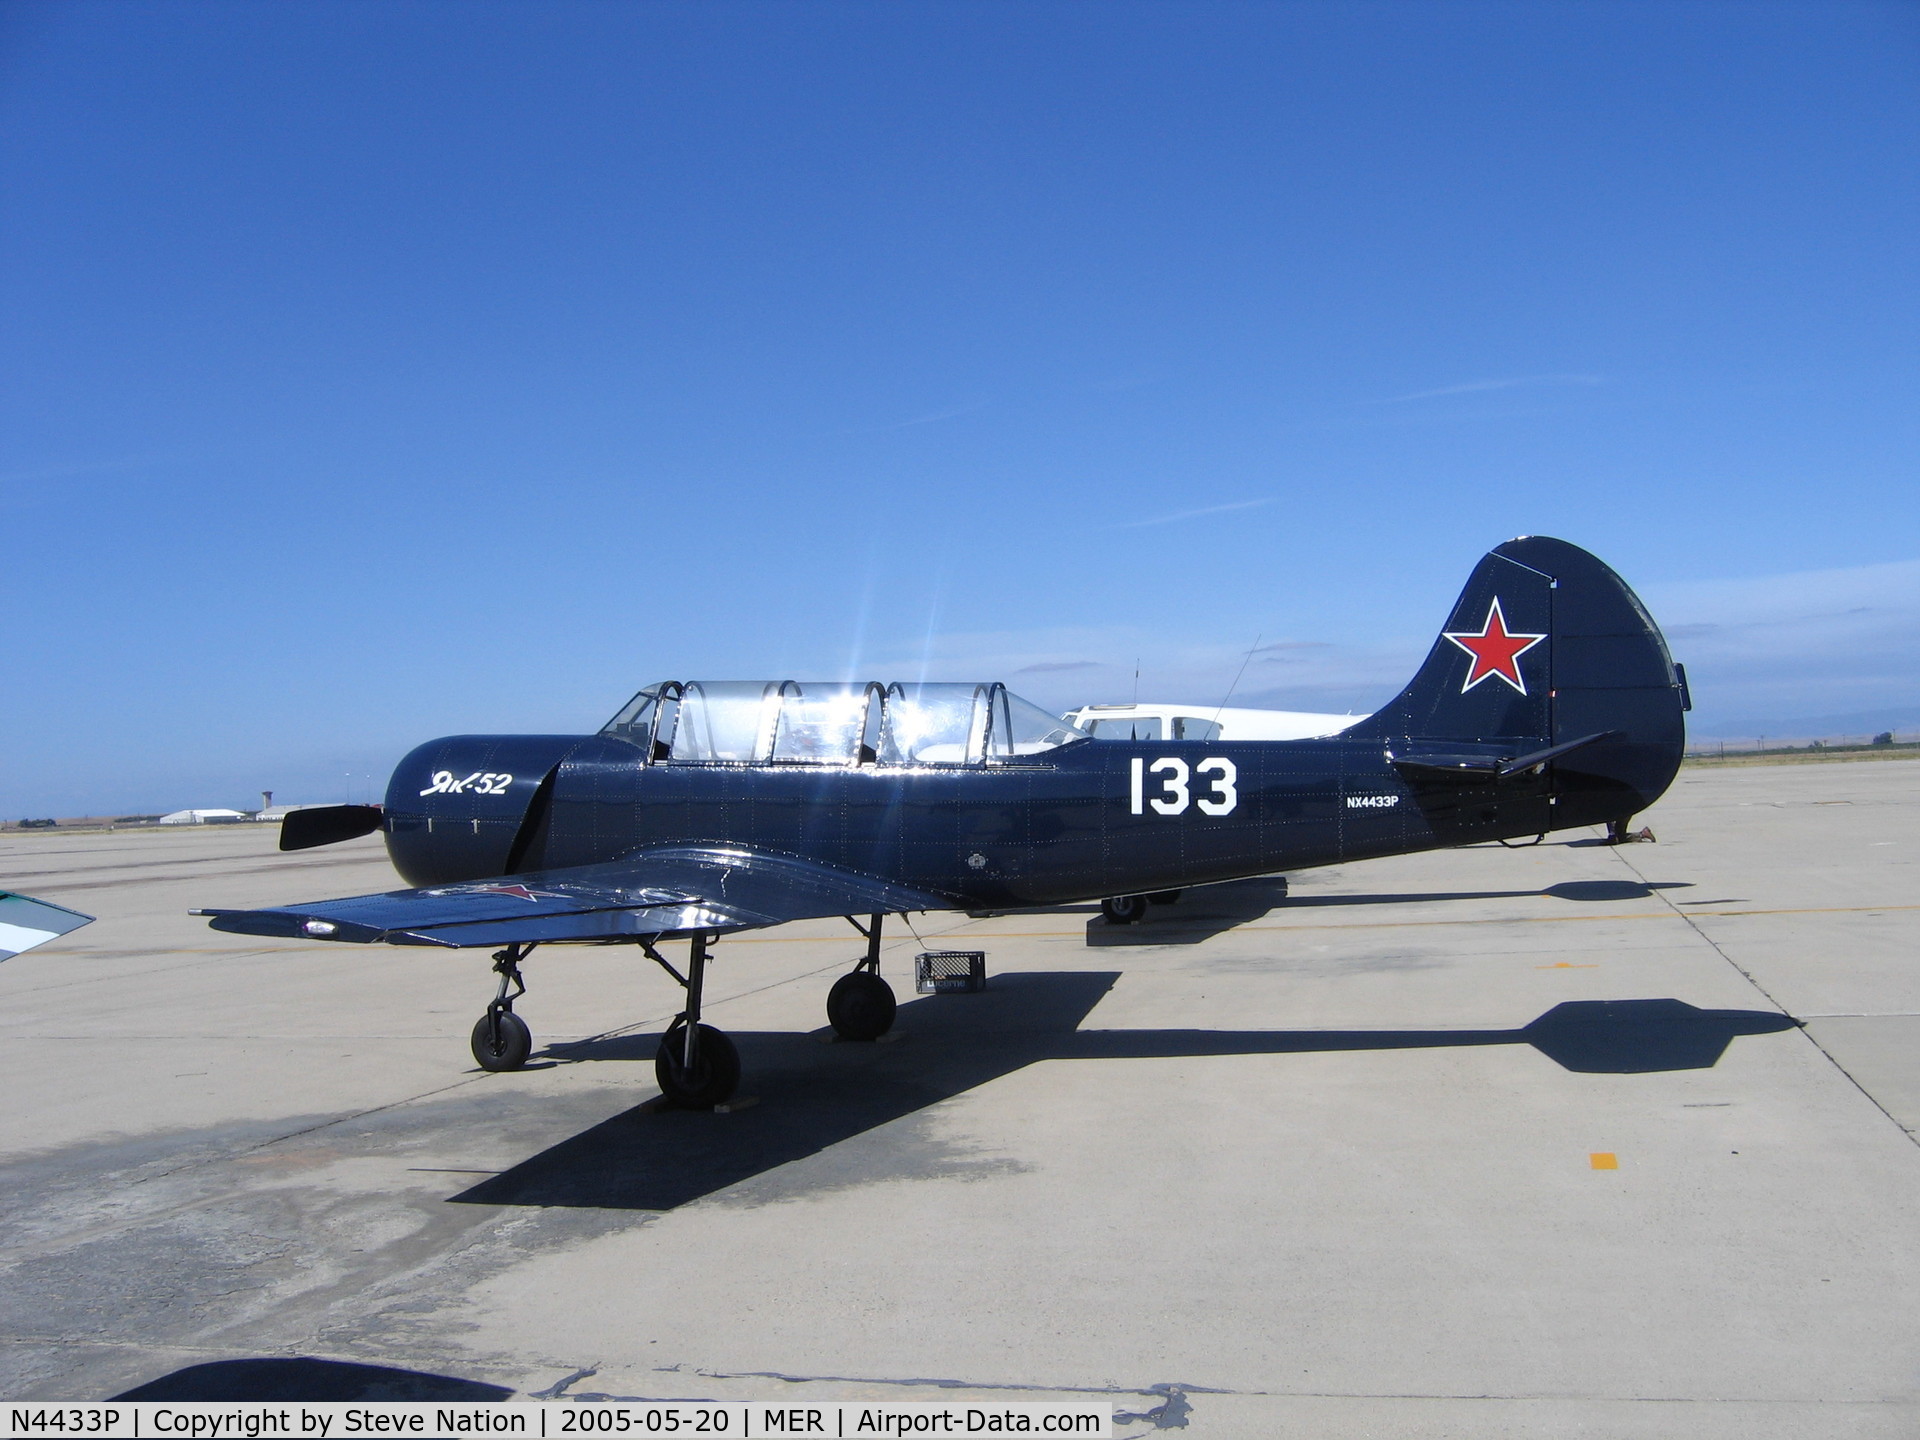 N4433P, 1987 Yakovlev Yak-52 C/N 878201, Yakflight One's YAK-52 NX4433P in dark blue as #133 at West Coast Formation Clinic